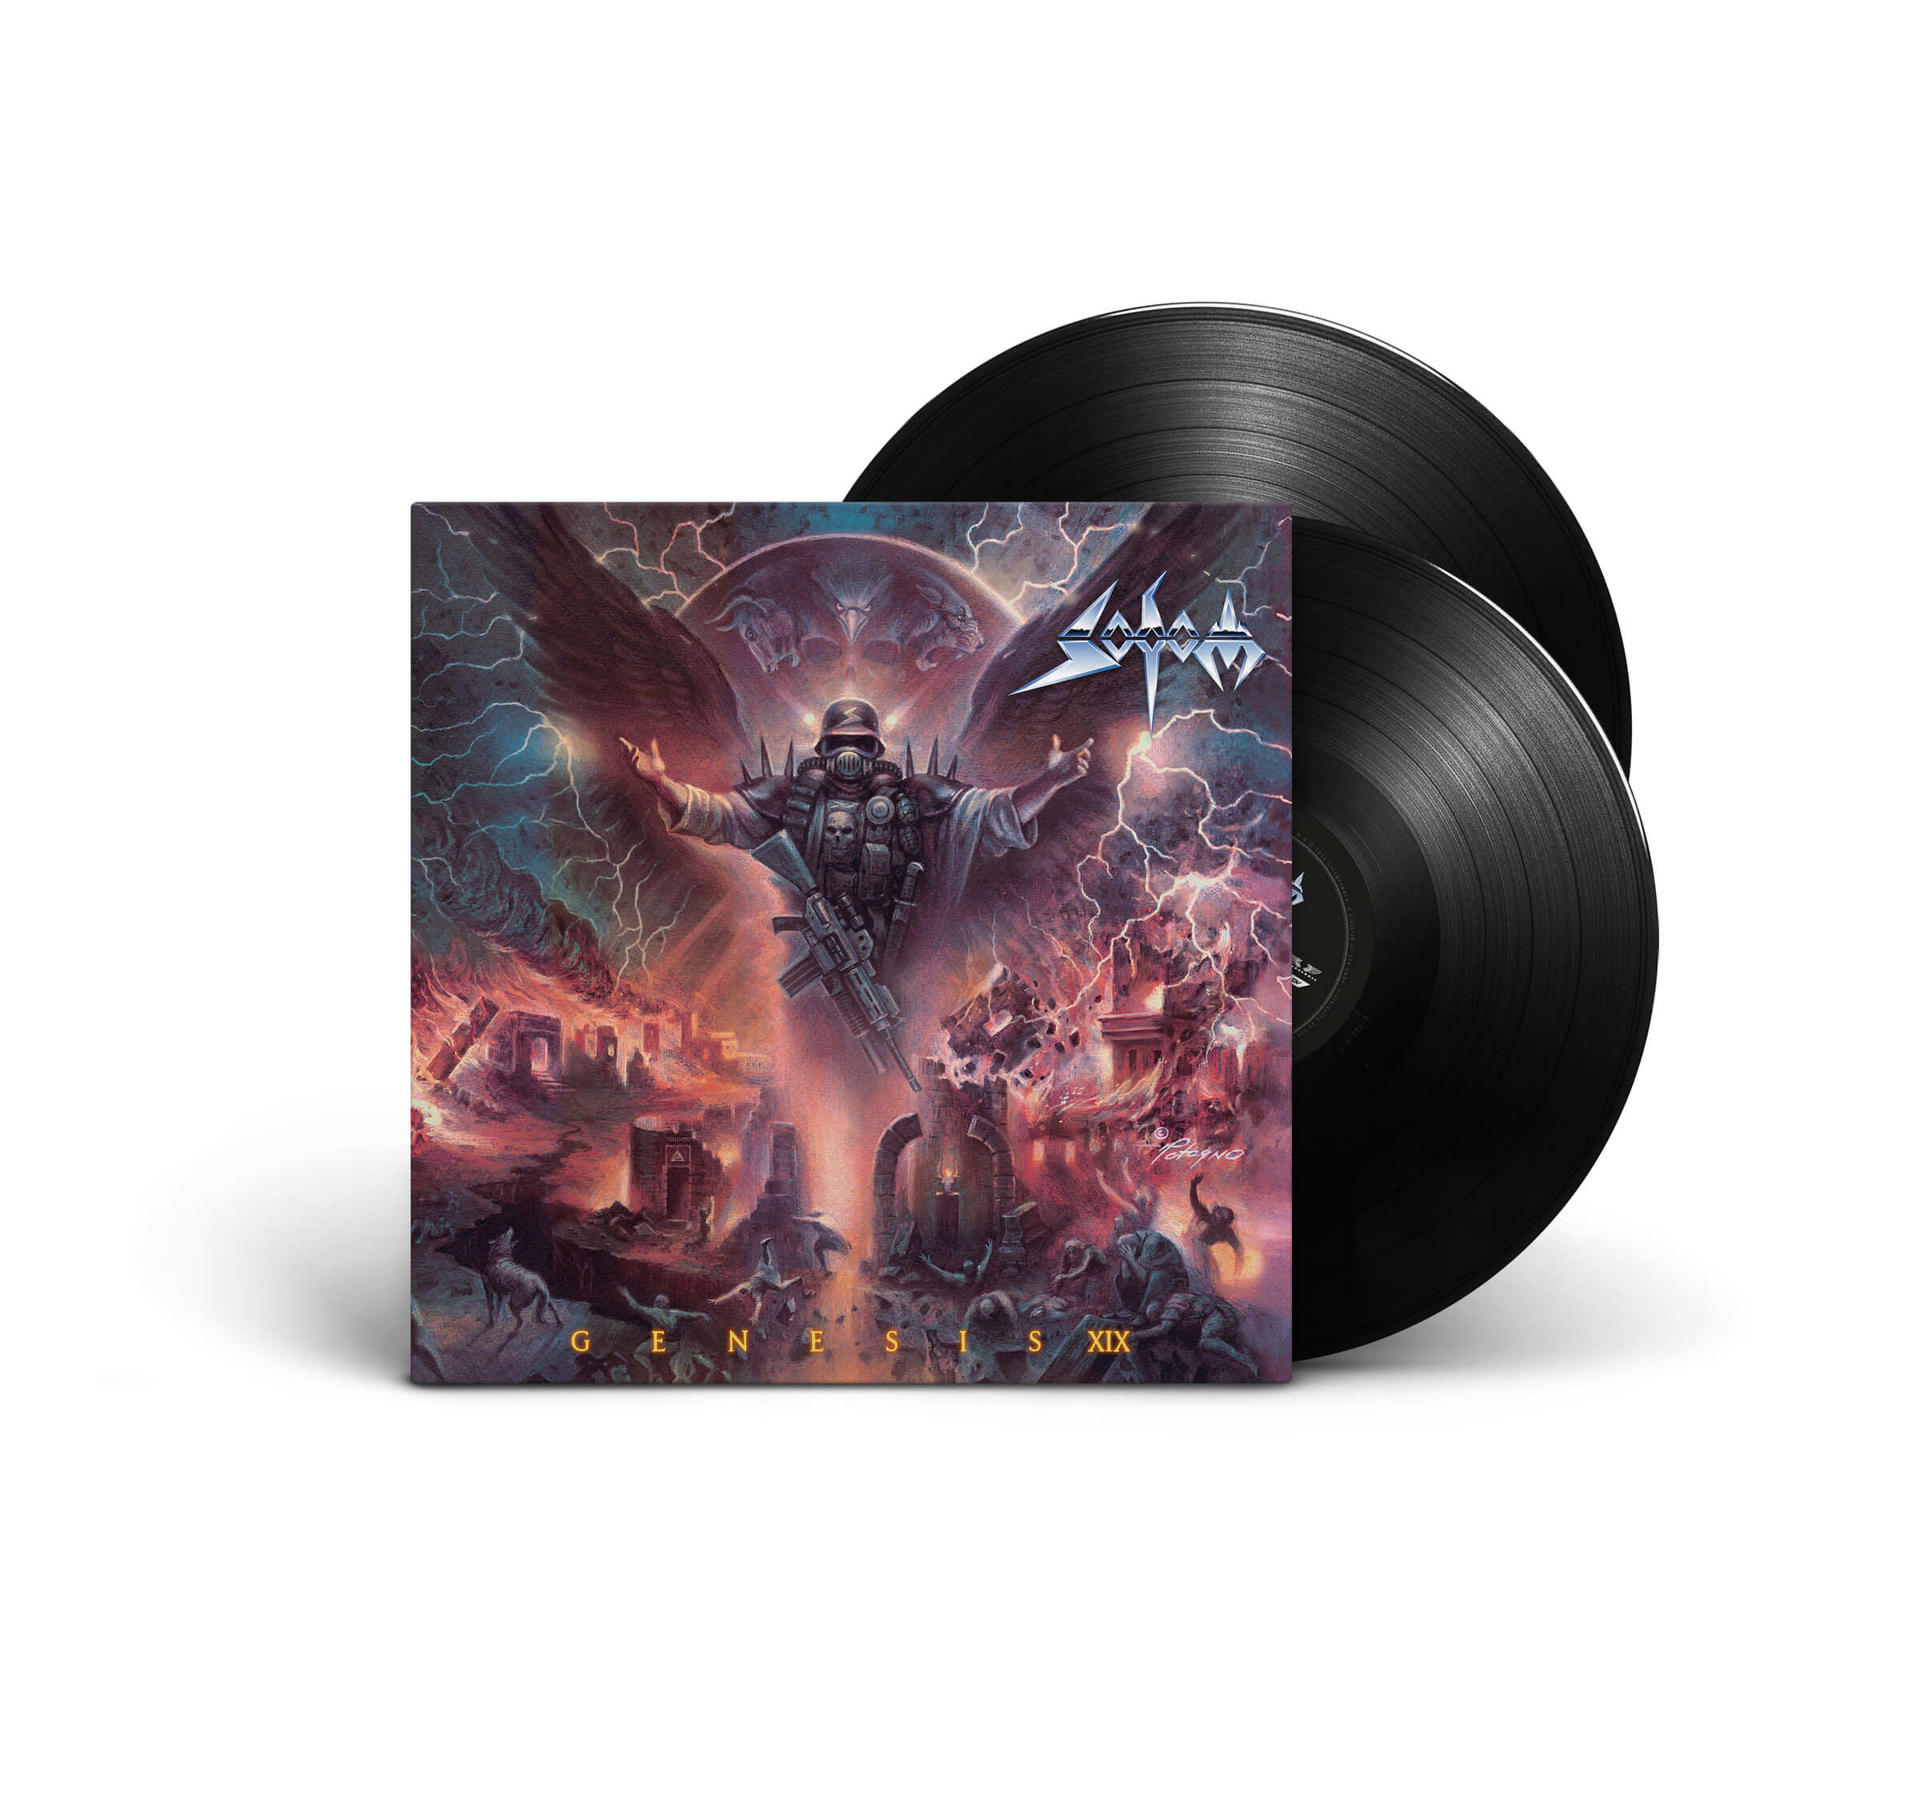 - Genesis (Vinyl) XIX - Sodom